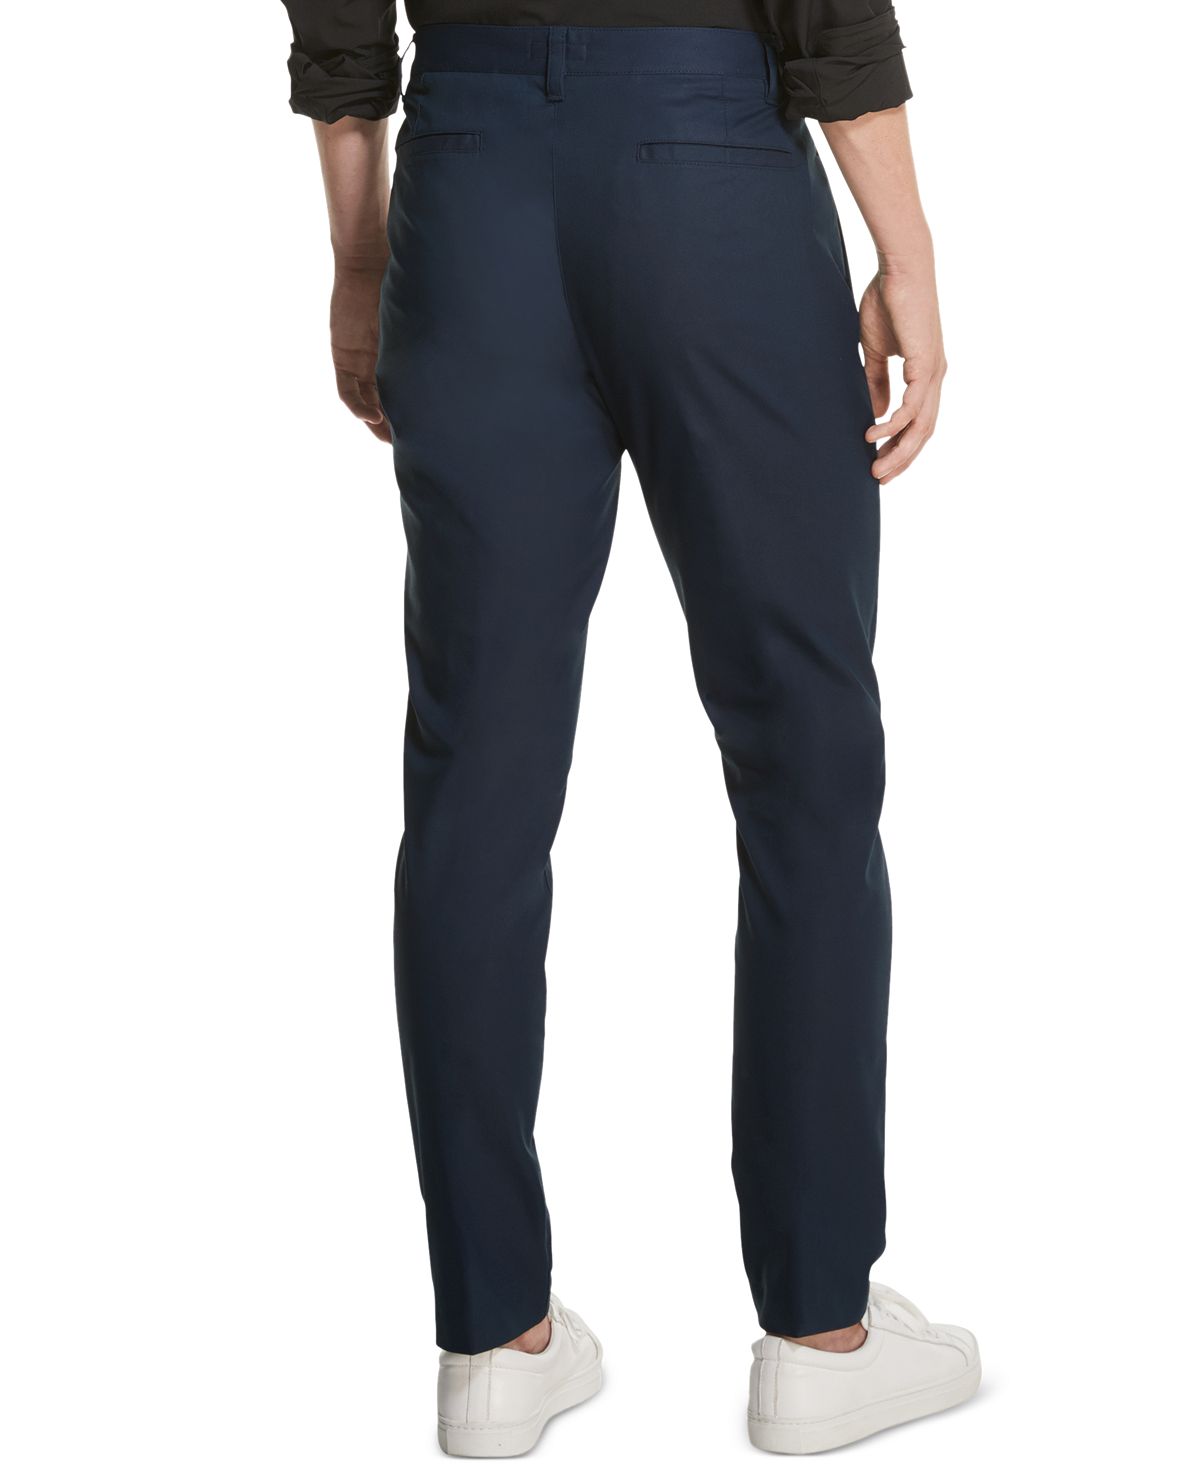 Dkny Straight-fit Tech Pants Navy Blazer